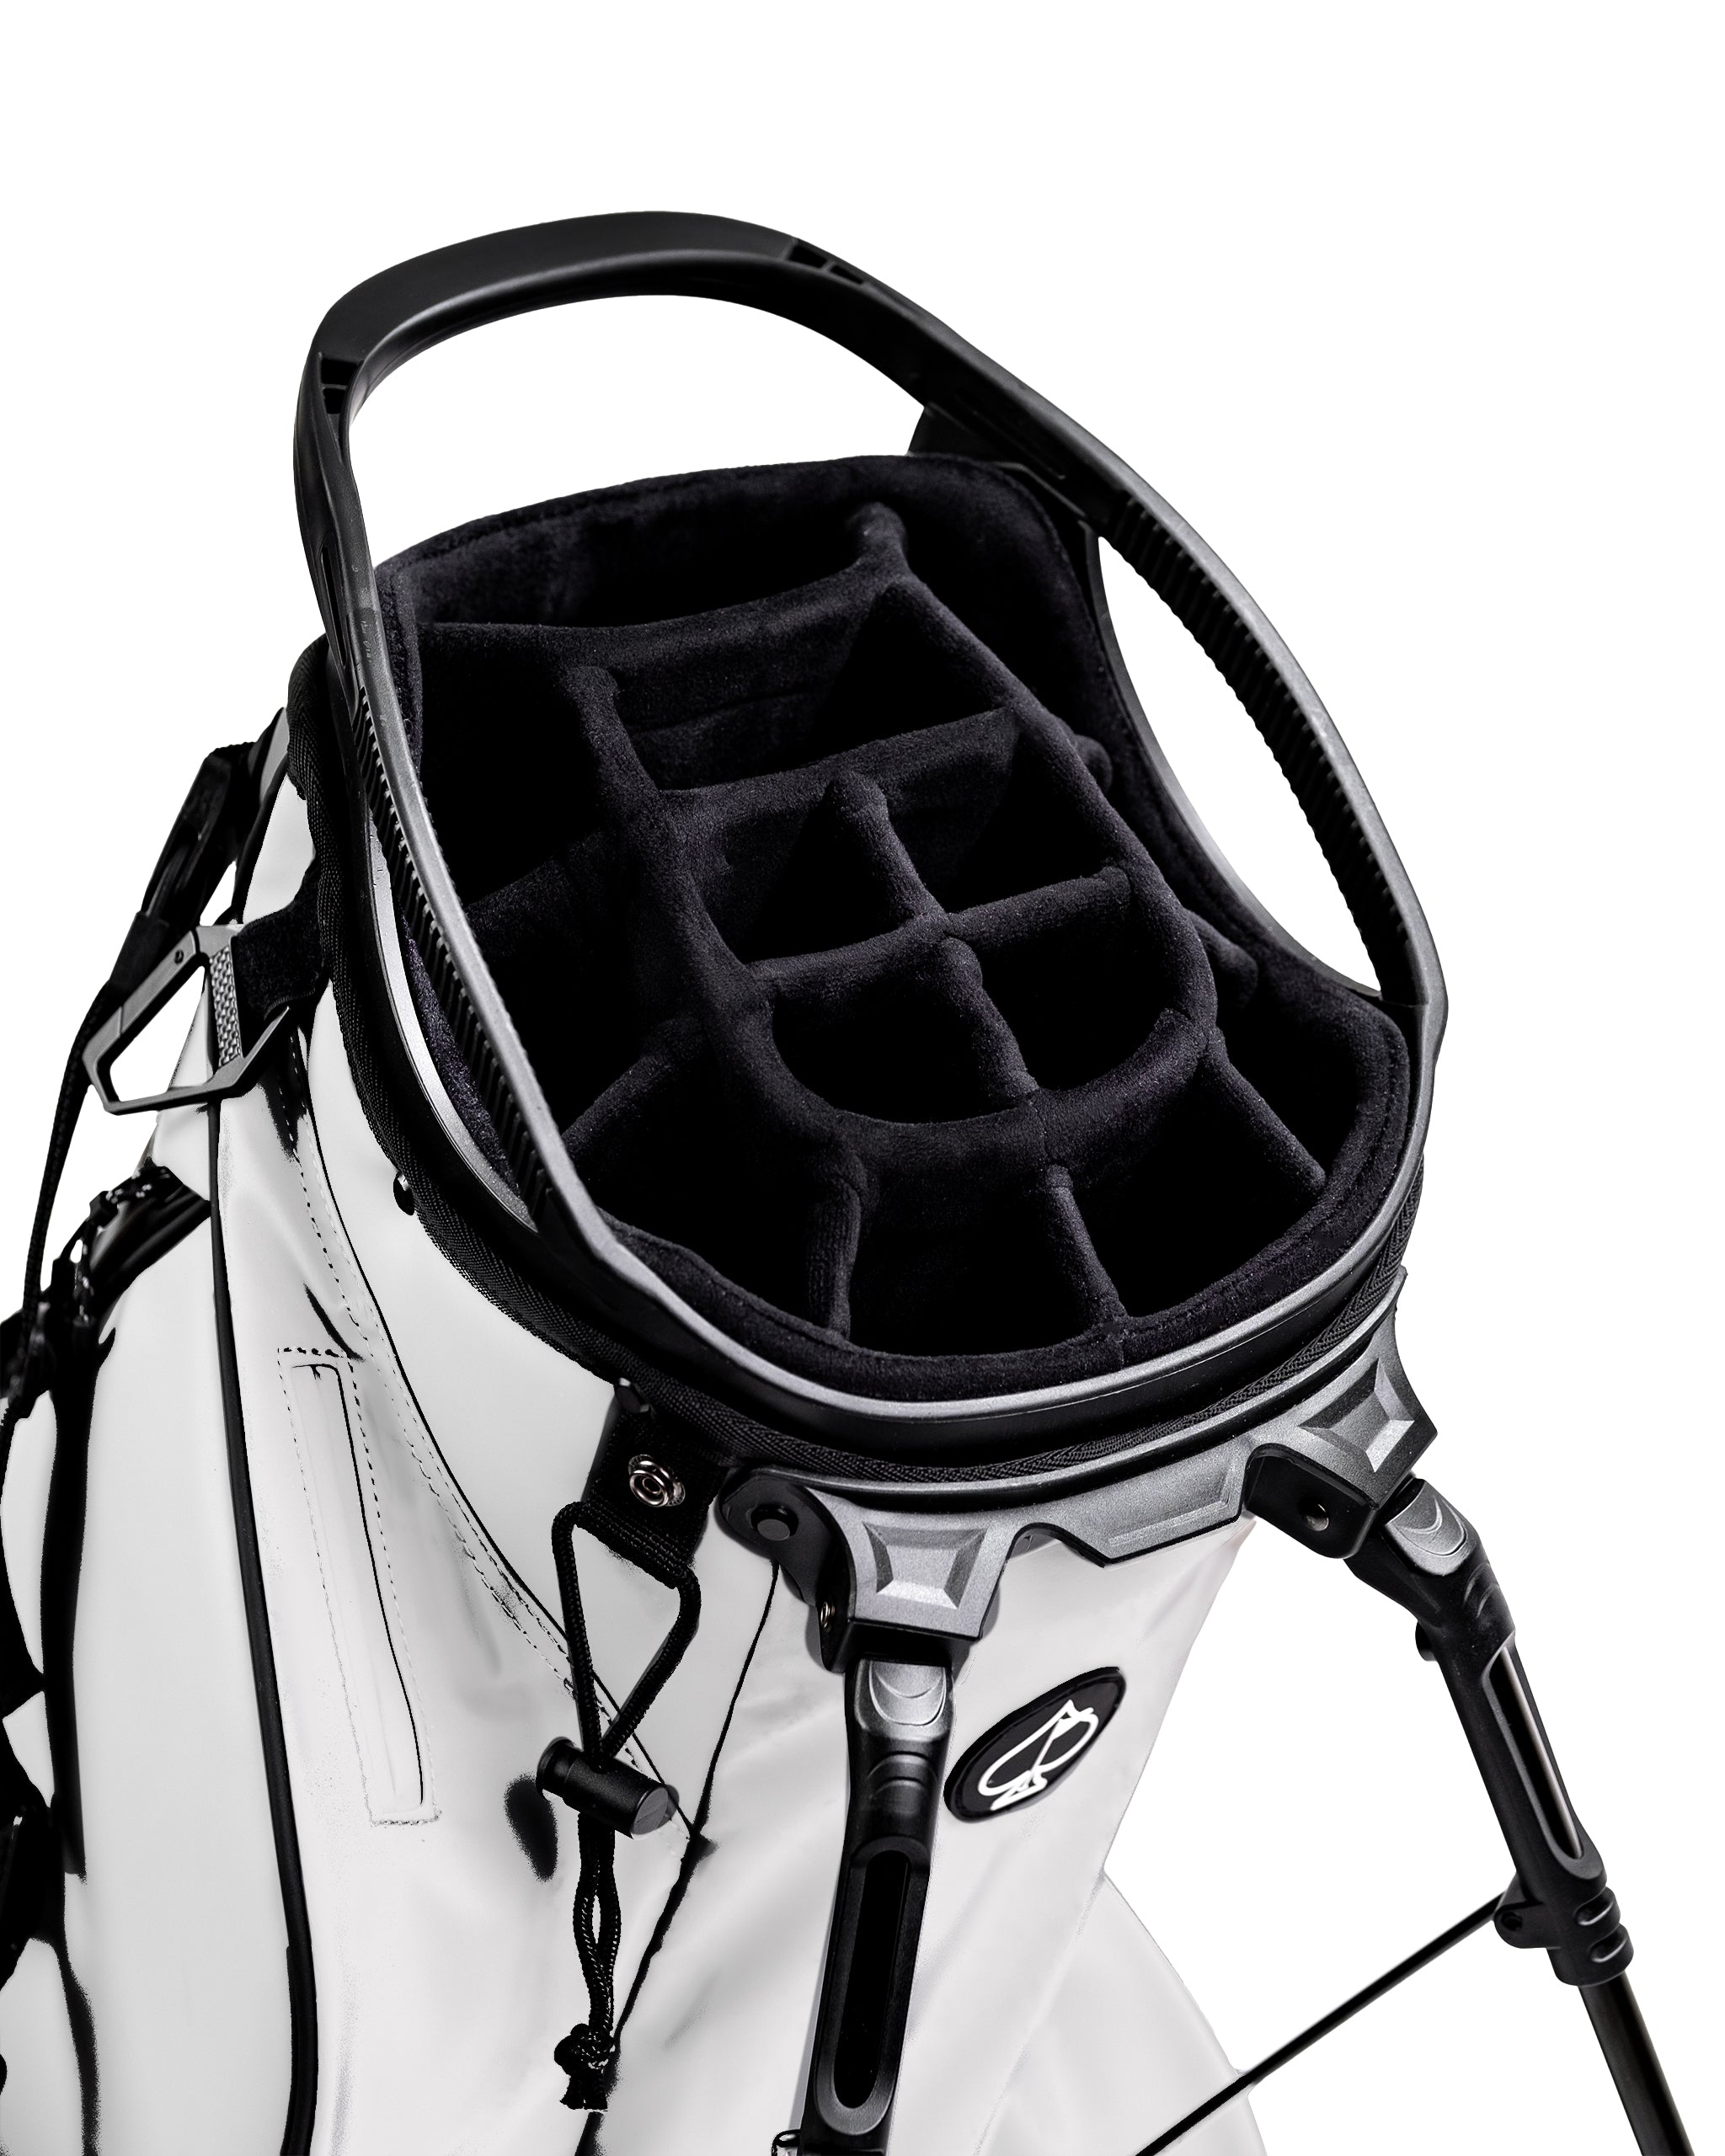 Player Preferred™ Golf Bag - Domino